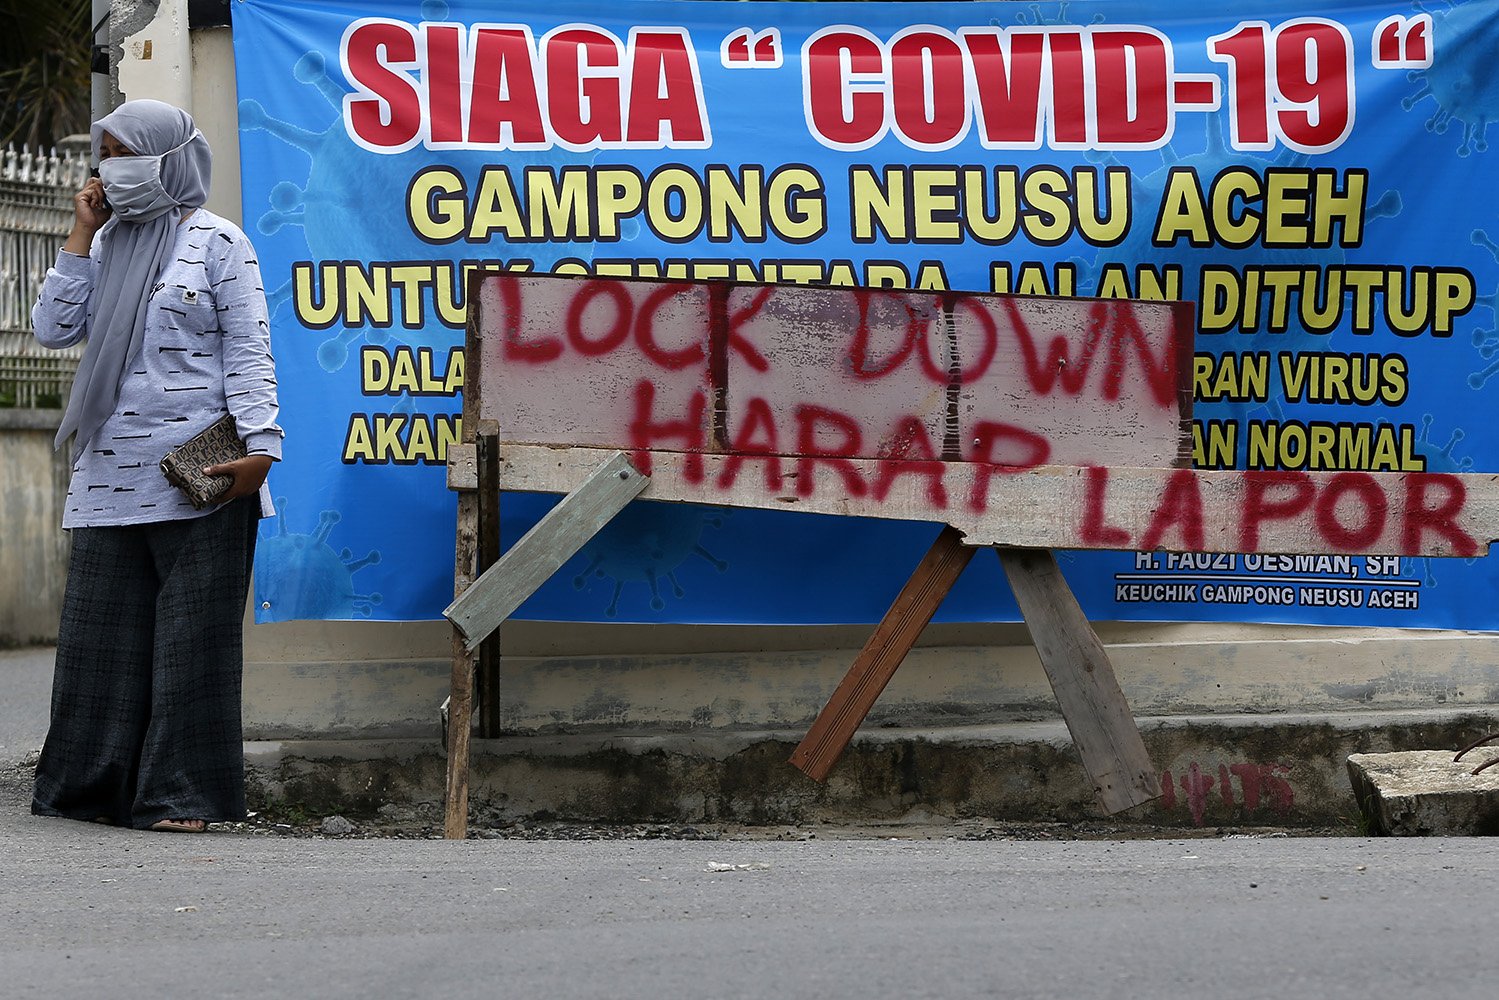 Warga berdiri di dekat pintu yang digunakan untuk karantina wilayah mandiri atau penutupan jalan akses masuk ke permukiman penduduk di Banda Aceh, Aceh. Aksi karantina wilayah mandiri Gampong (Desa) di Banda Aceh masih berlanjut sebagai upaya untuk mencegah penularan dan penyebaran virus Corona (COVID-19). 